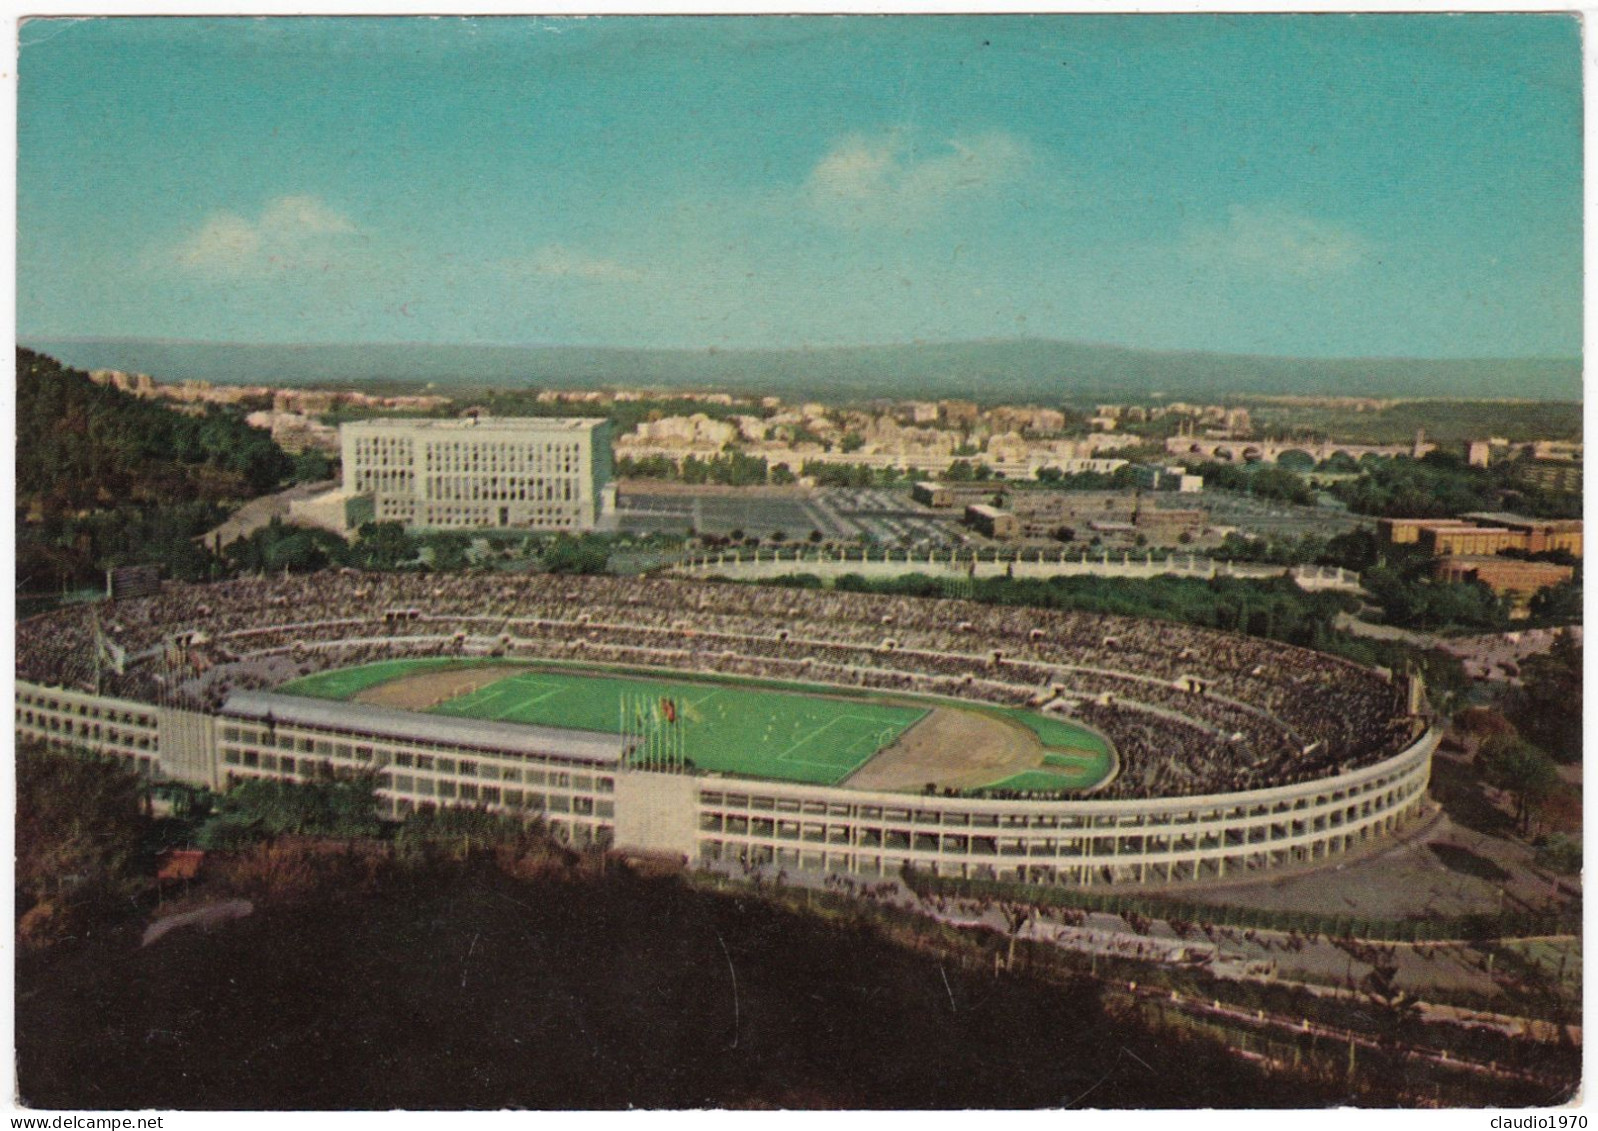 ROMA - CARTOLINA -  STADIO DEI CENTOMILA - VIAGGIATA PER MONZA 1962 - AFFRANCATURA MECCANICA - Stadien & Sportanlagen